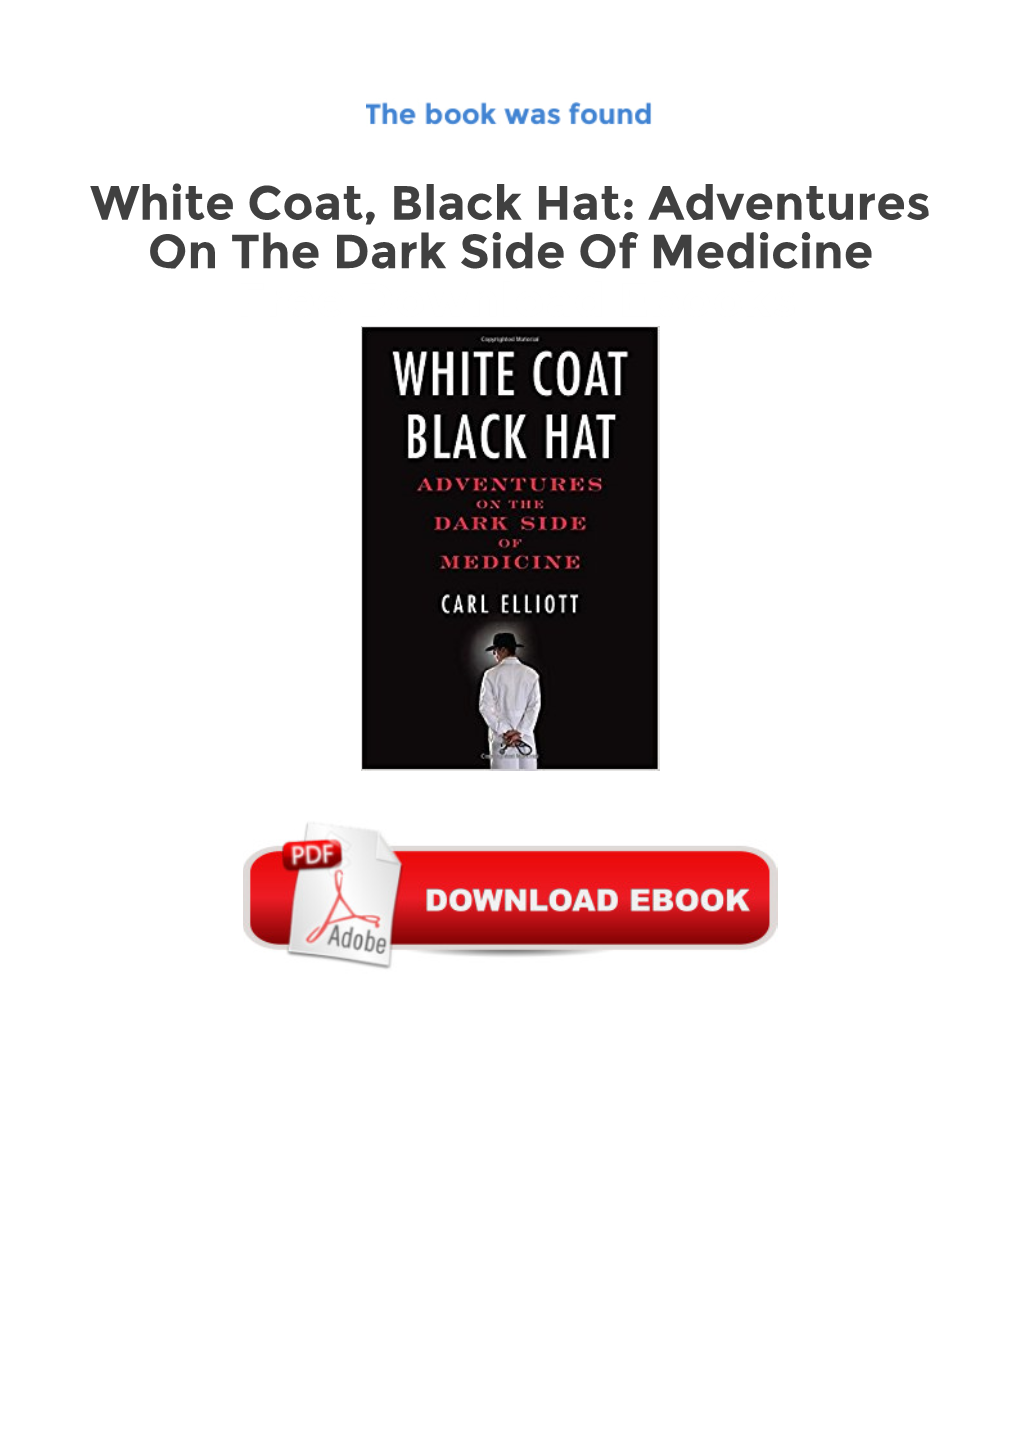 White Coat, Black Hat: Adventures on the Dark Side of Medicine Free